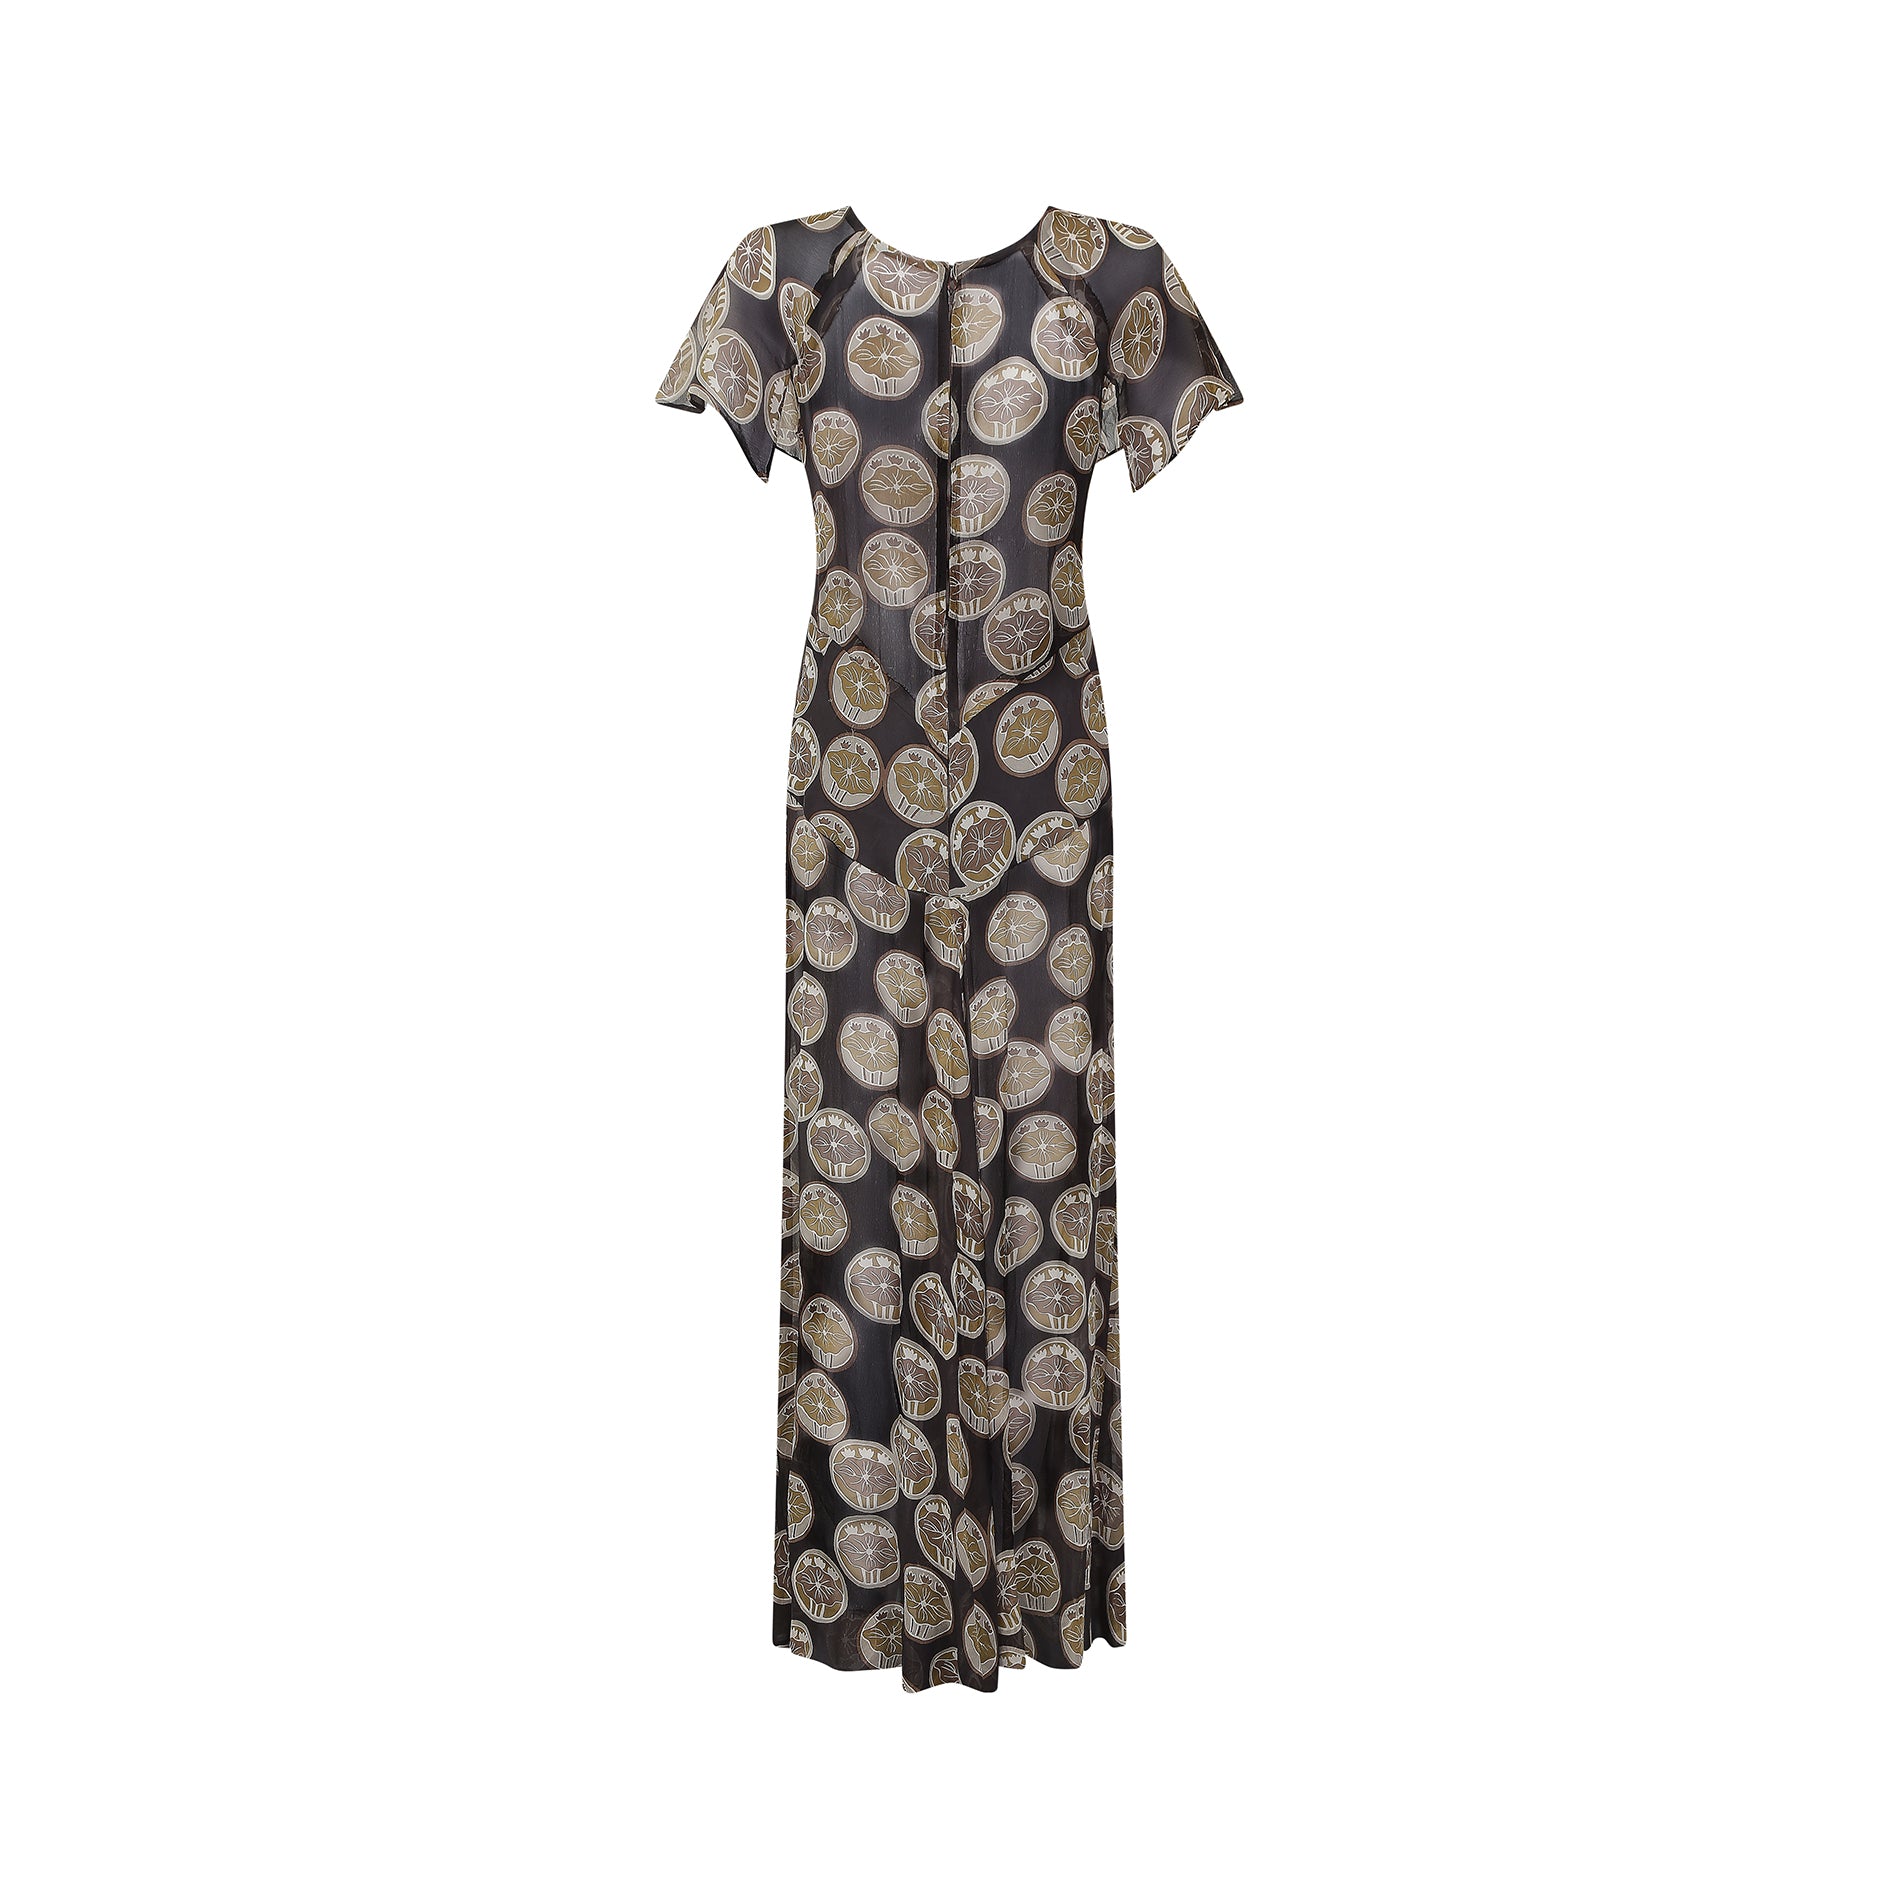 ARCHIVE - 1930s Silk Chiffon Brown Novelty Print Dress